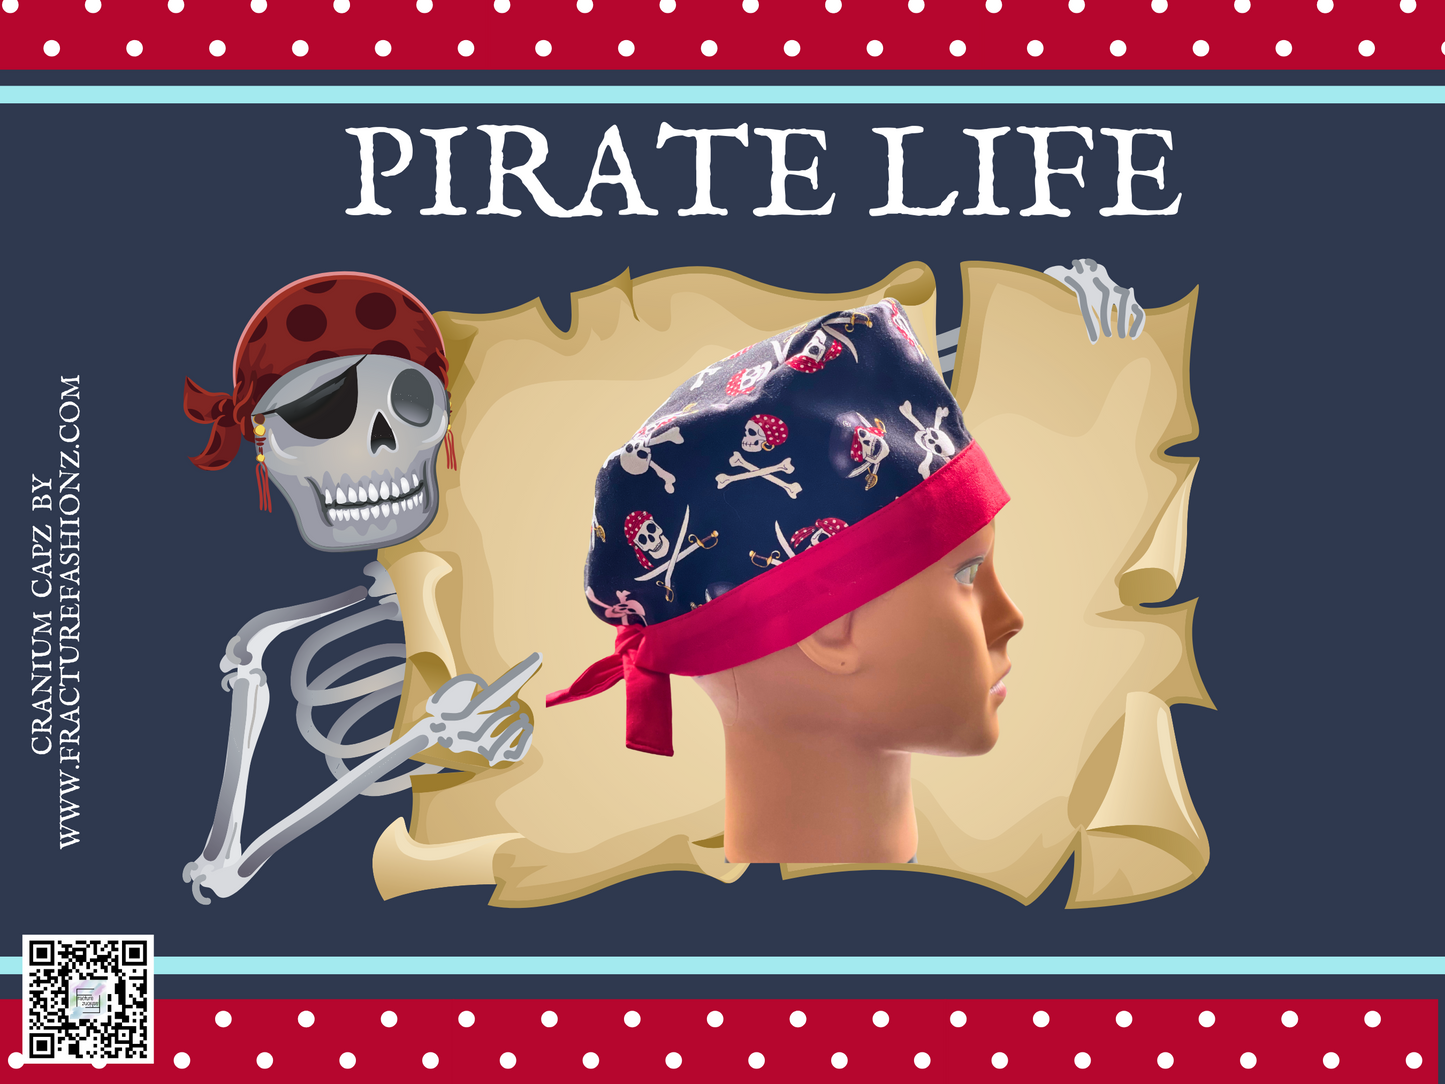 Pirate Life Scrub Hat